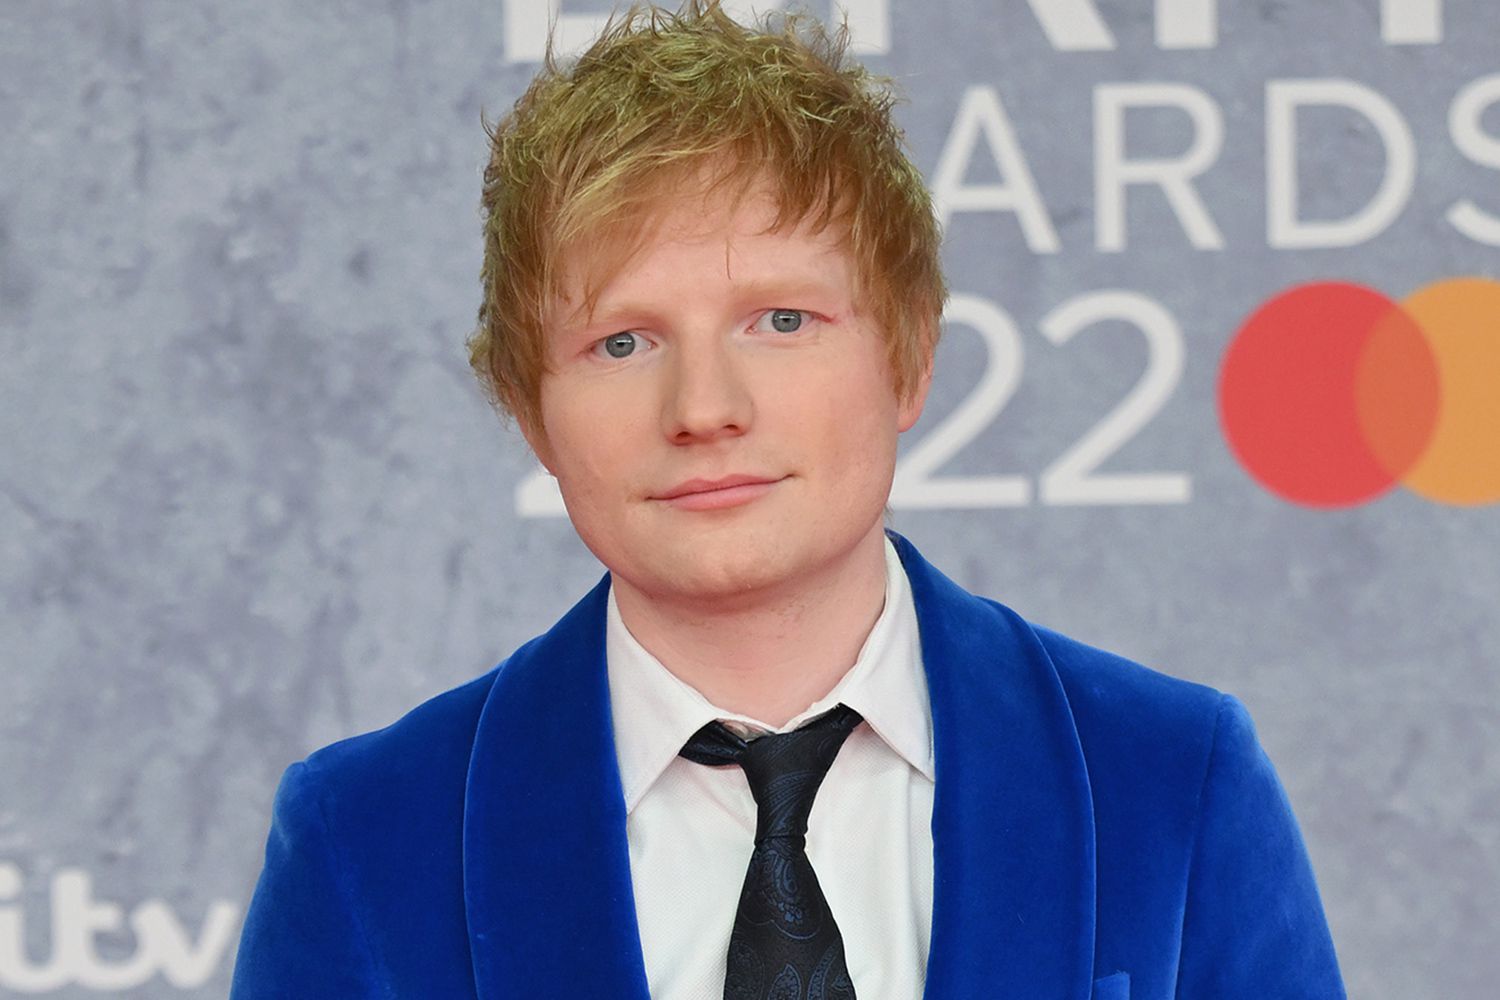 Ed Sheeran Music Copyright Case - Marvin Gaye's "Let's Get It On" Lawsuit